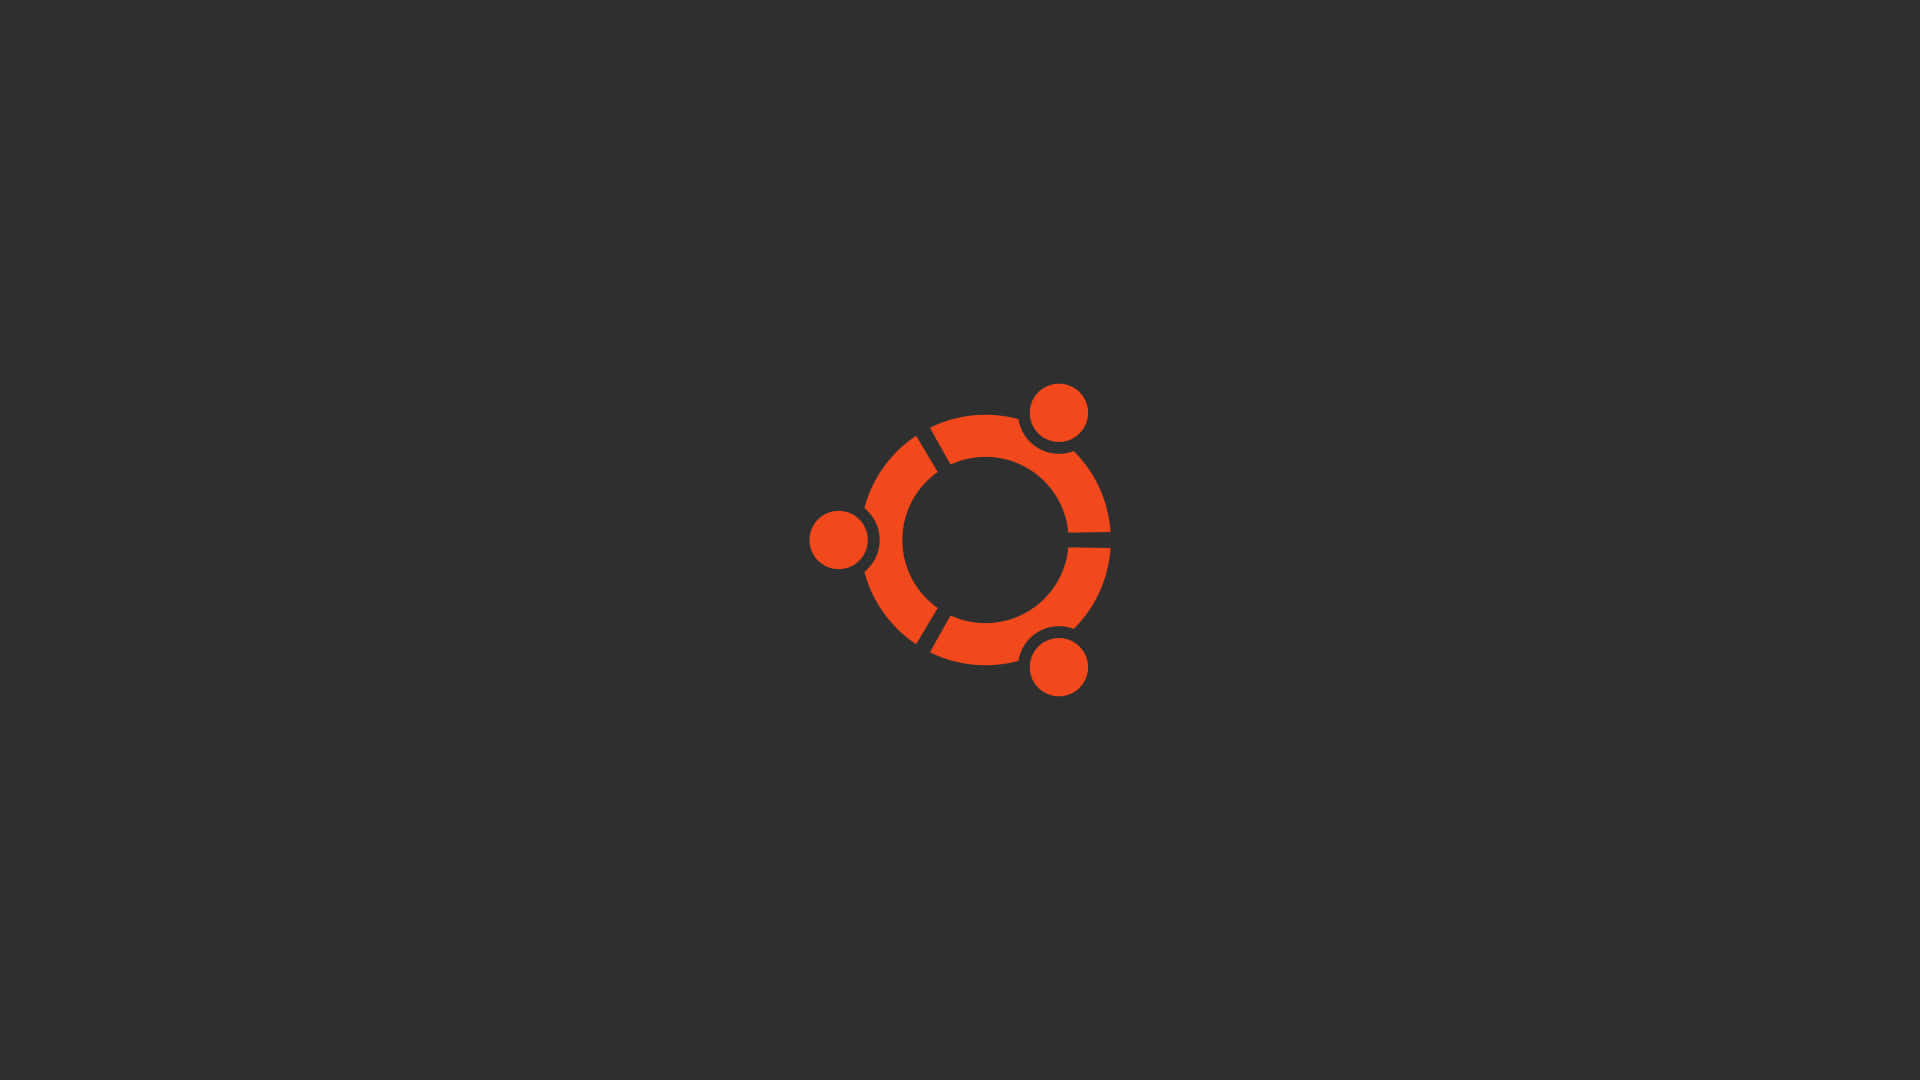 Ubuntu - The Future of Operating Systems